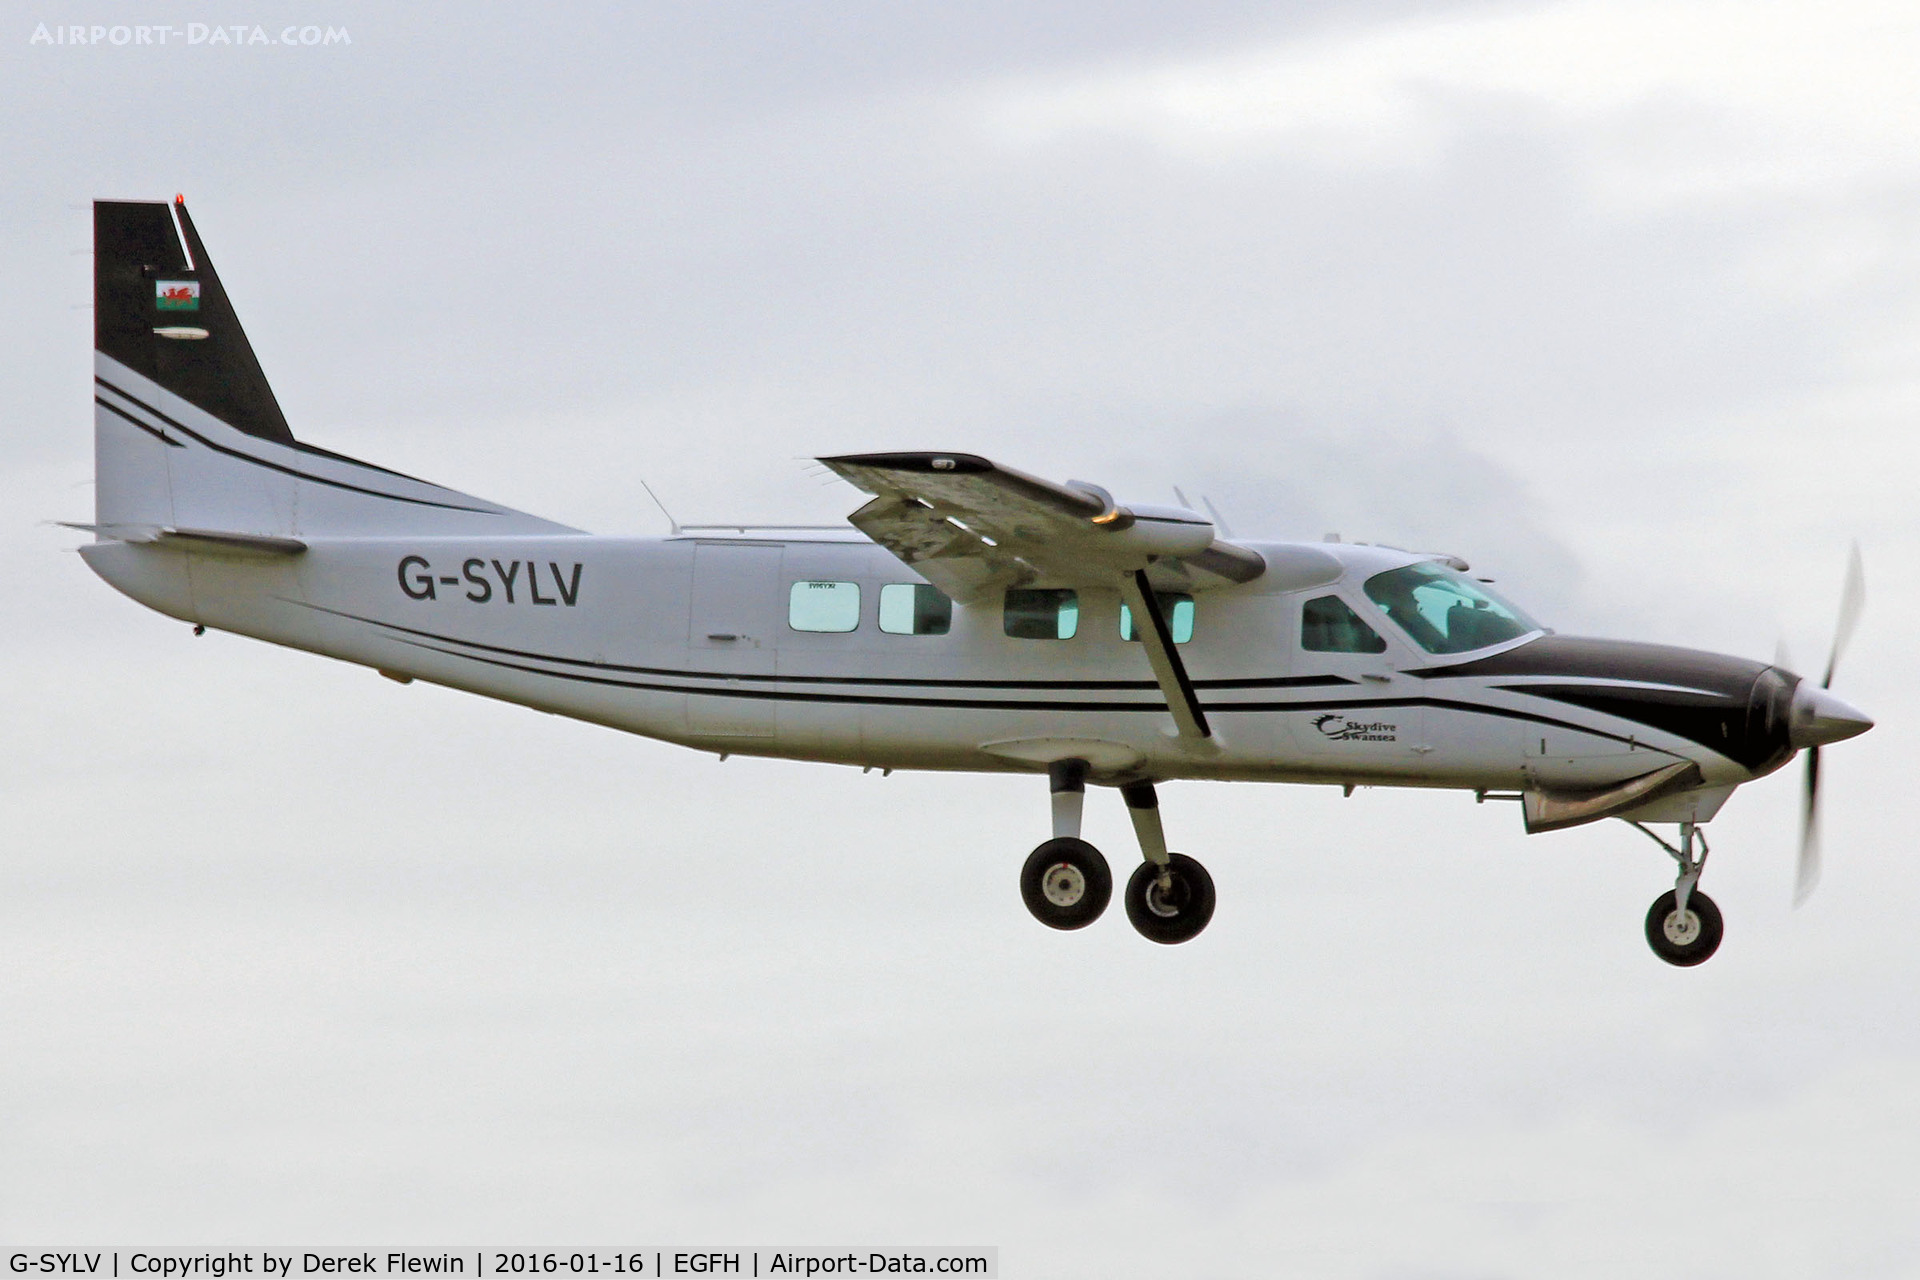 G-SYLV, 2002 Cessna 208B  Grand Caravan C/N 208B0936, Grand Caravan, Skydive Swansea, previously N40753, EC-IEV, D-FAAH, UR-CEGC, D-FAAH, seen landing on runway 28 after dropping a stick of x10 Parachutists.